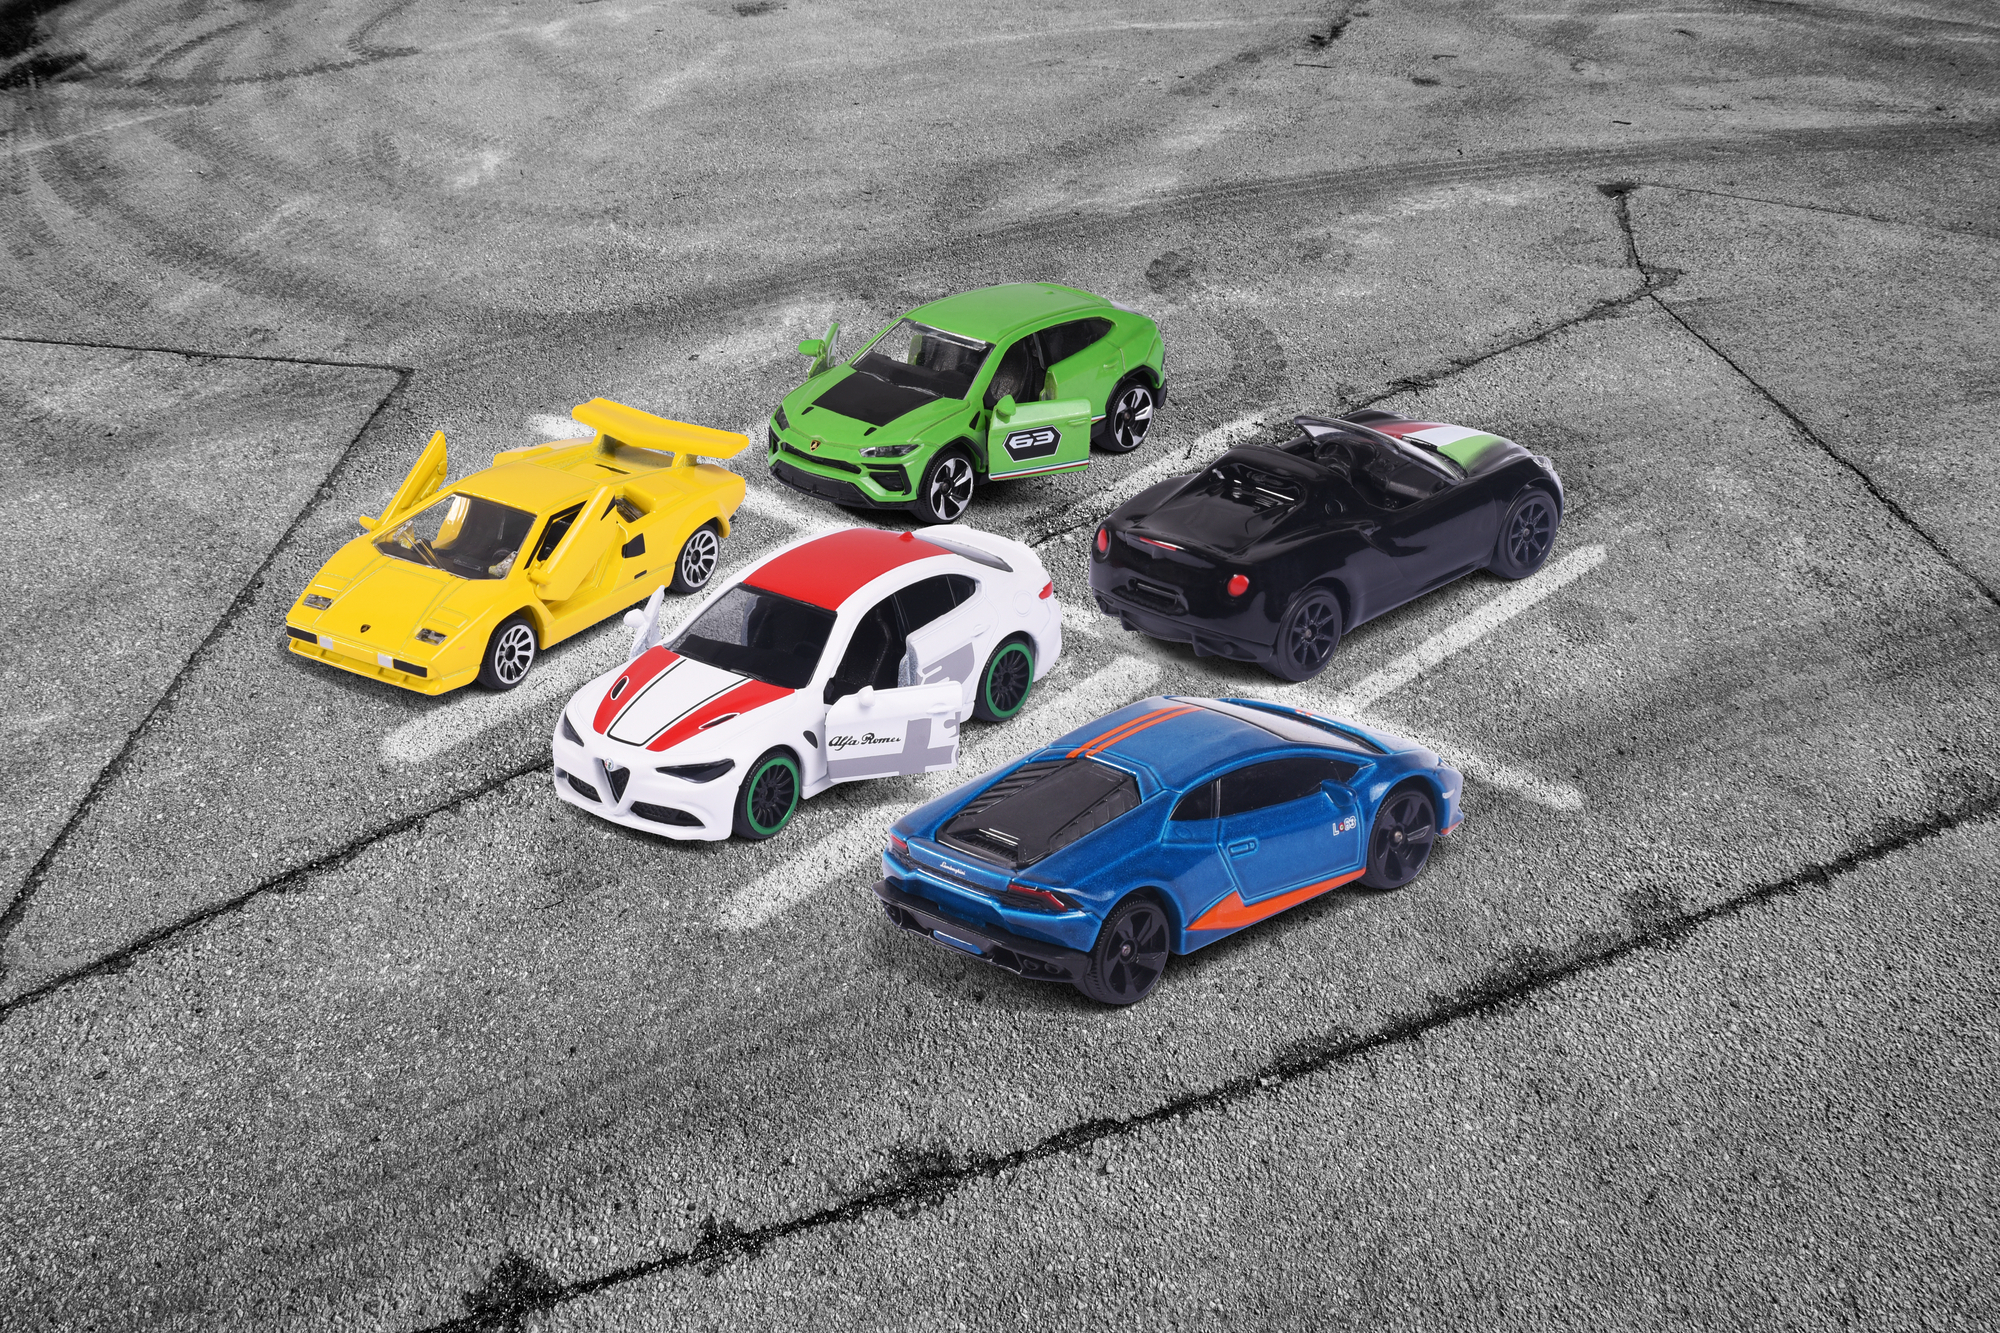 MAJORETTE Dream Cars Italy Geschenkset 5 Mehrfarbig Teile Spielzeugauto